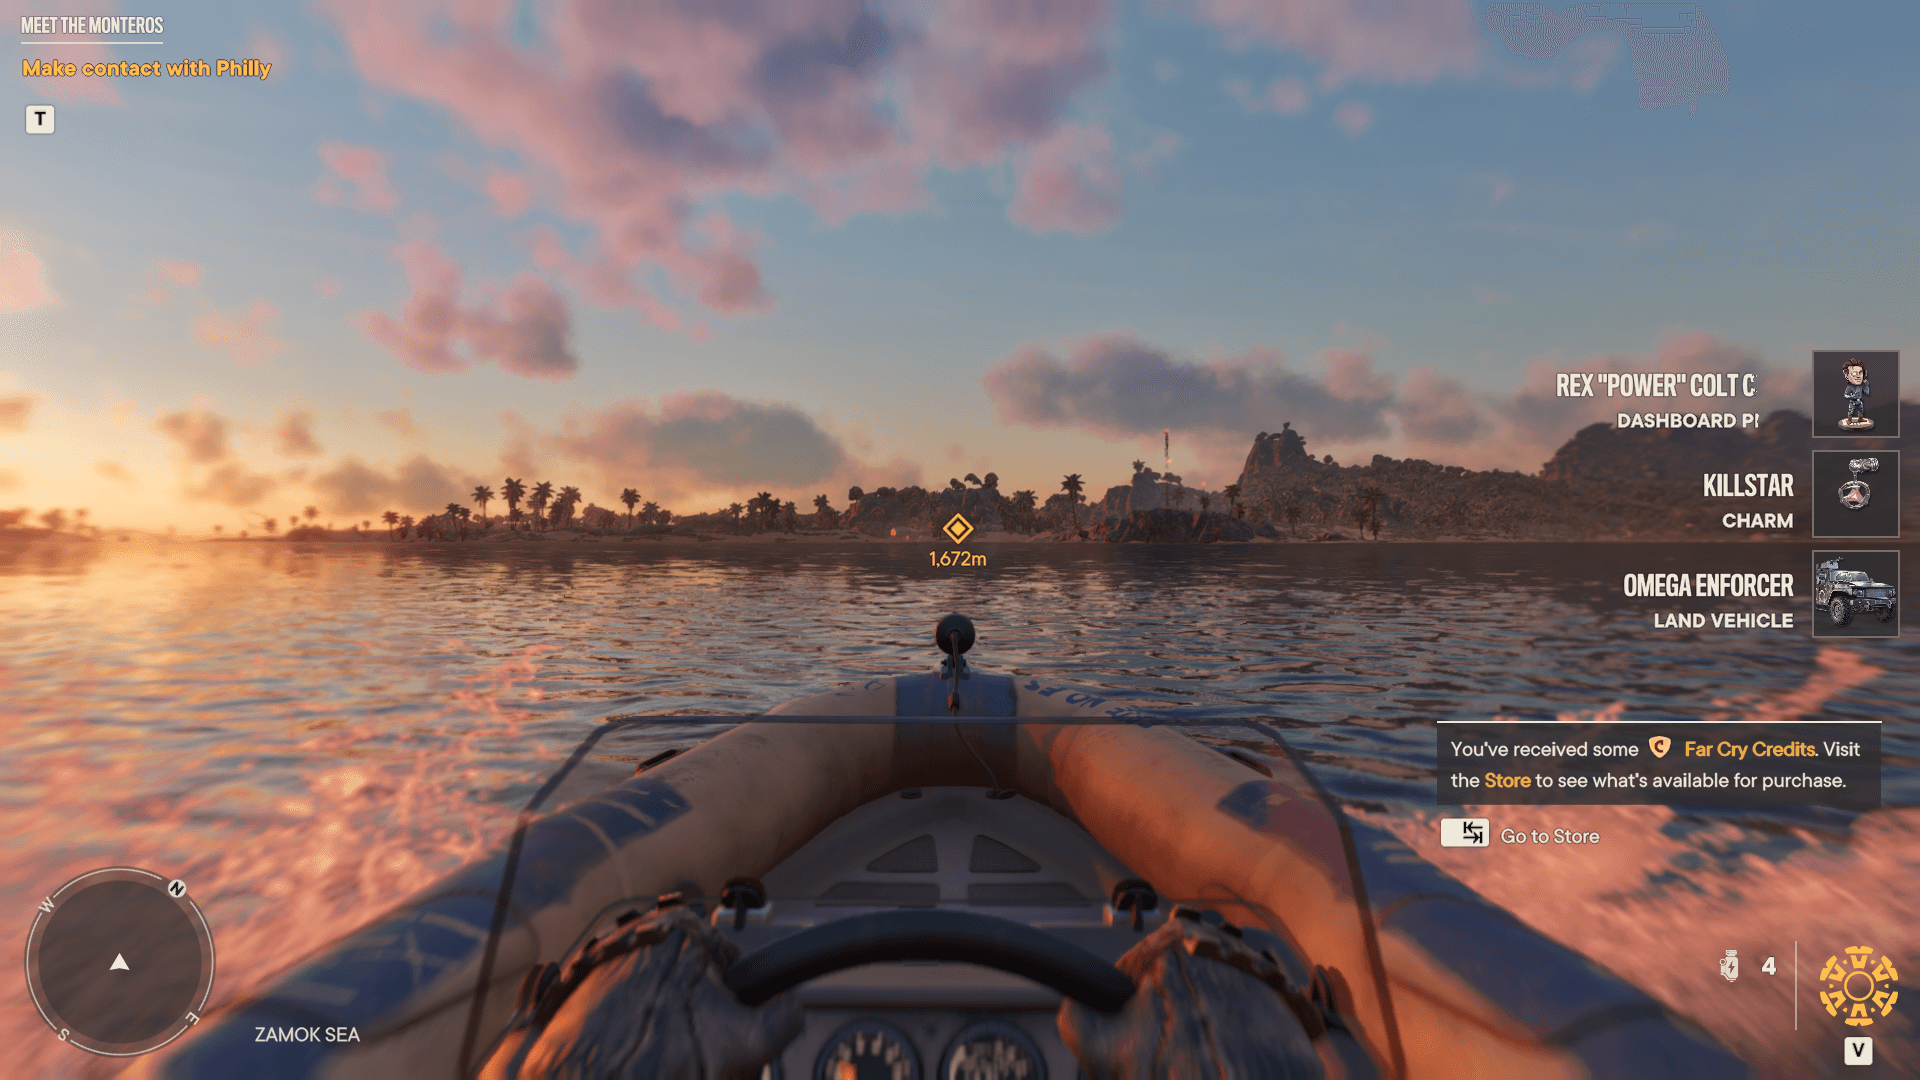 HUD screenshot of Far Cry 6 video game interface.